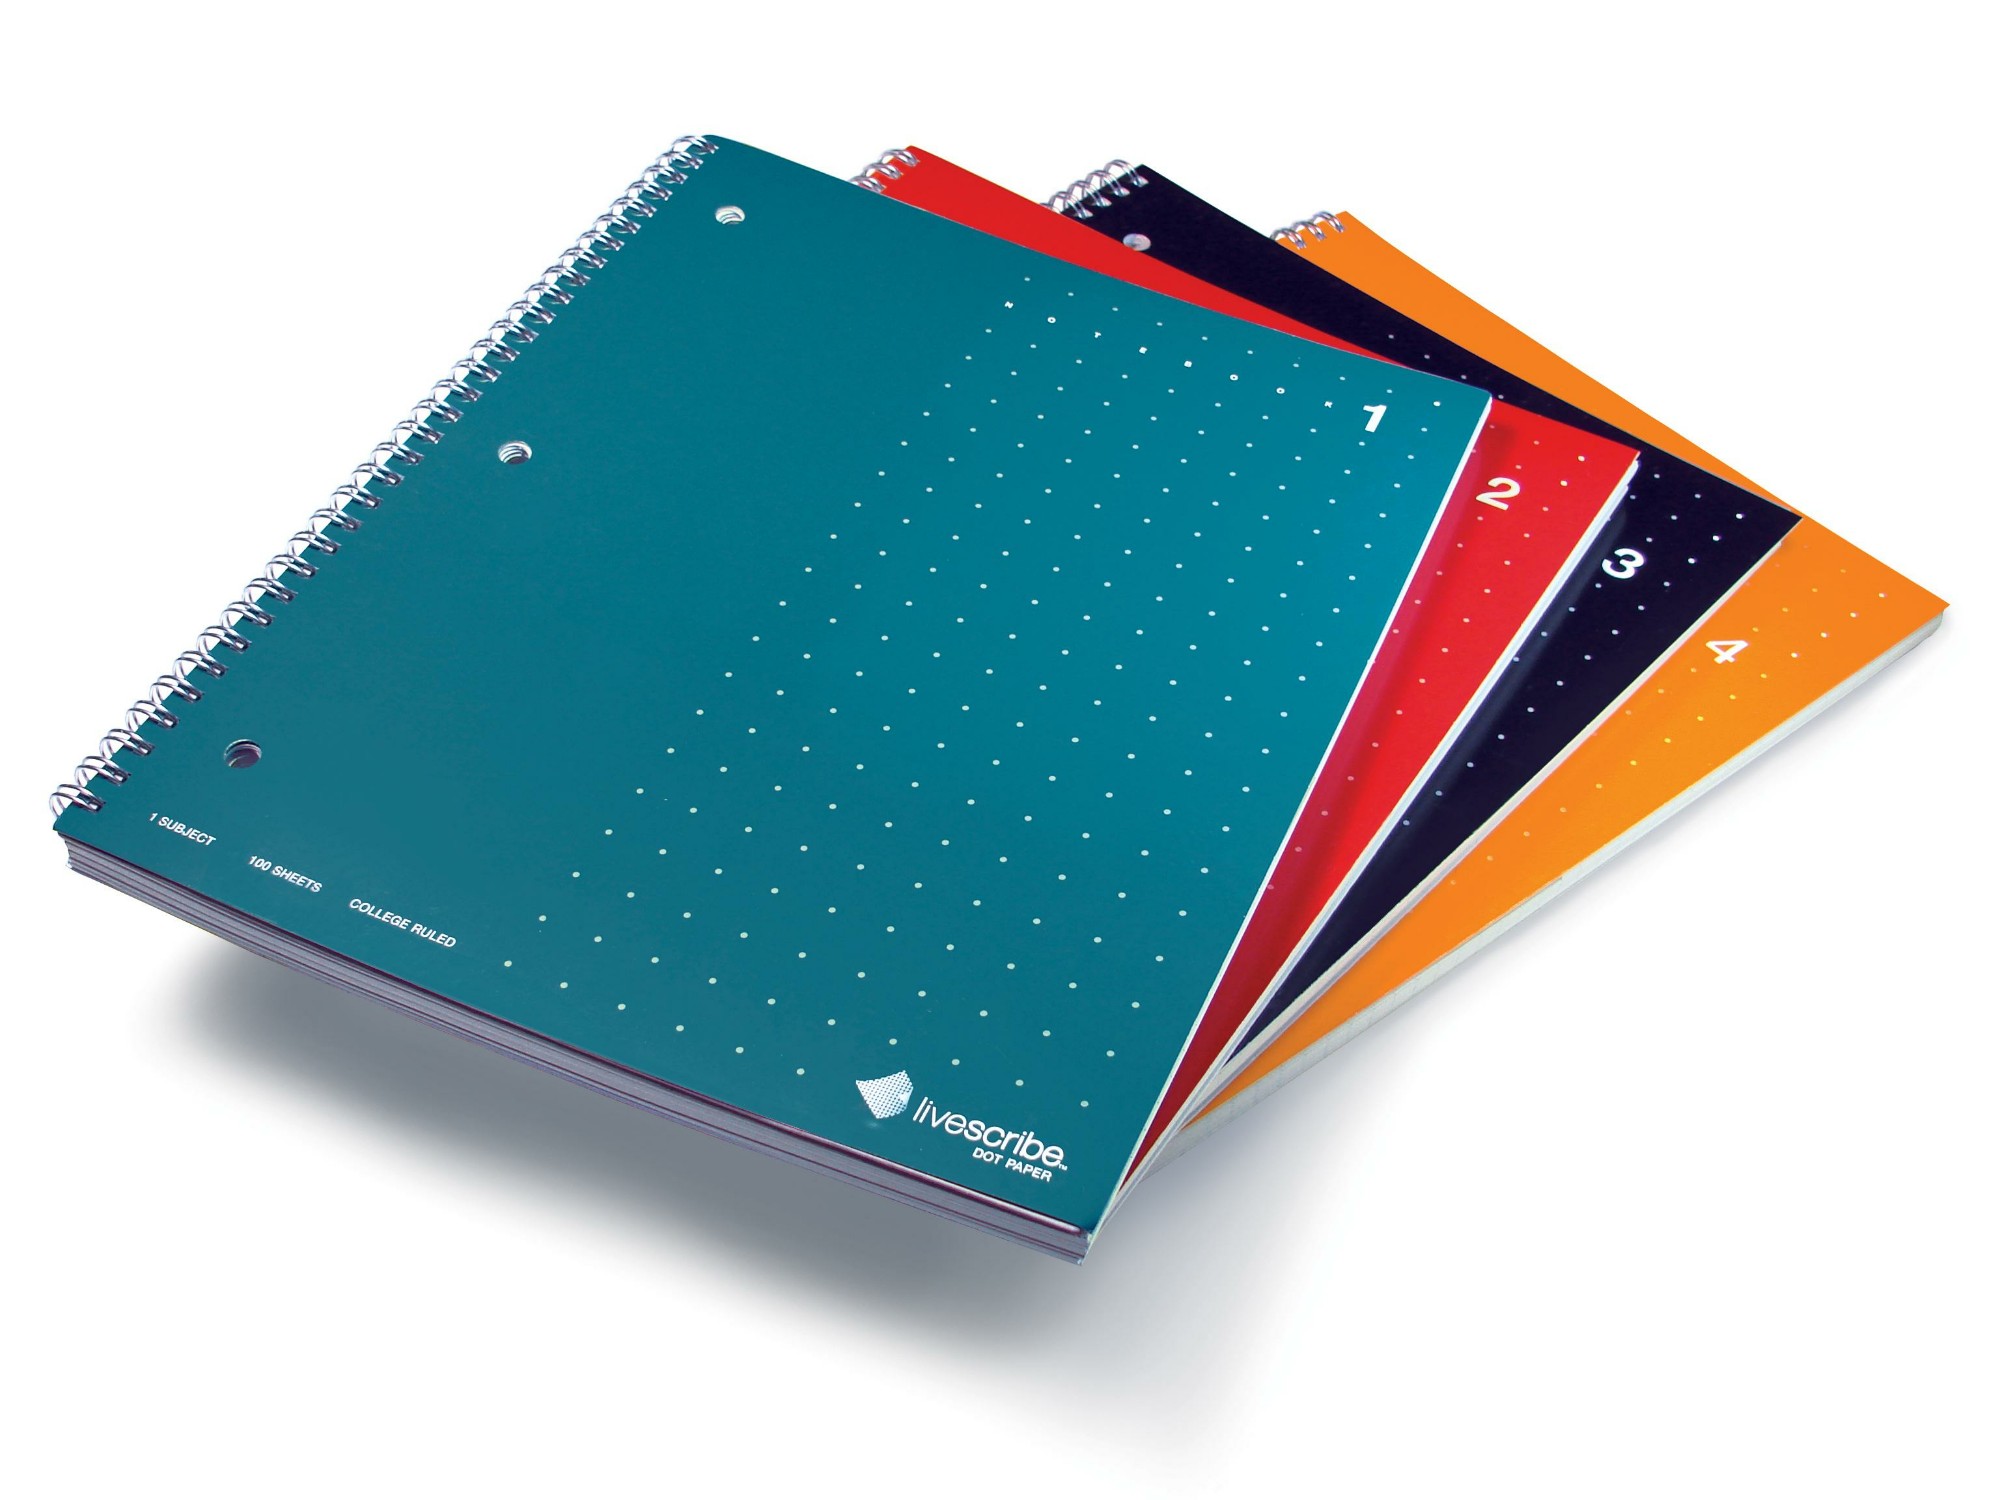 Livescribe ANA00017 writing notebook 100 sheets Black, Blue, Orange, Red